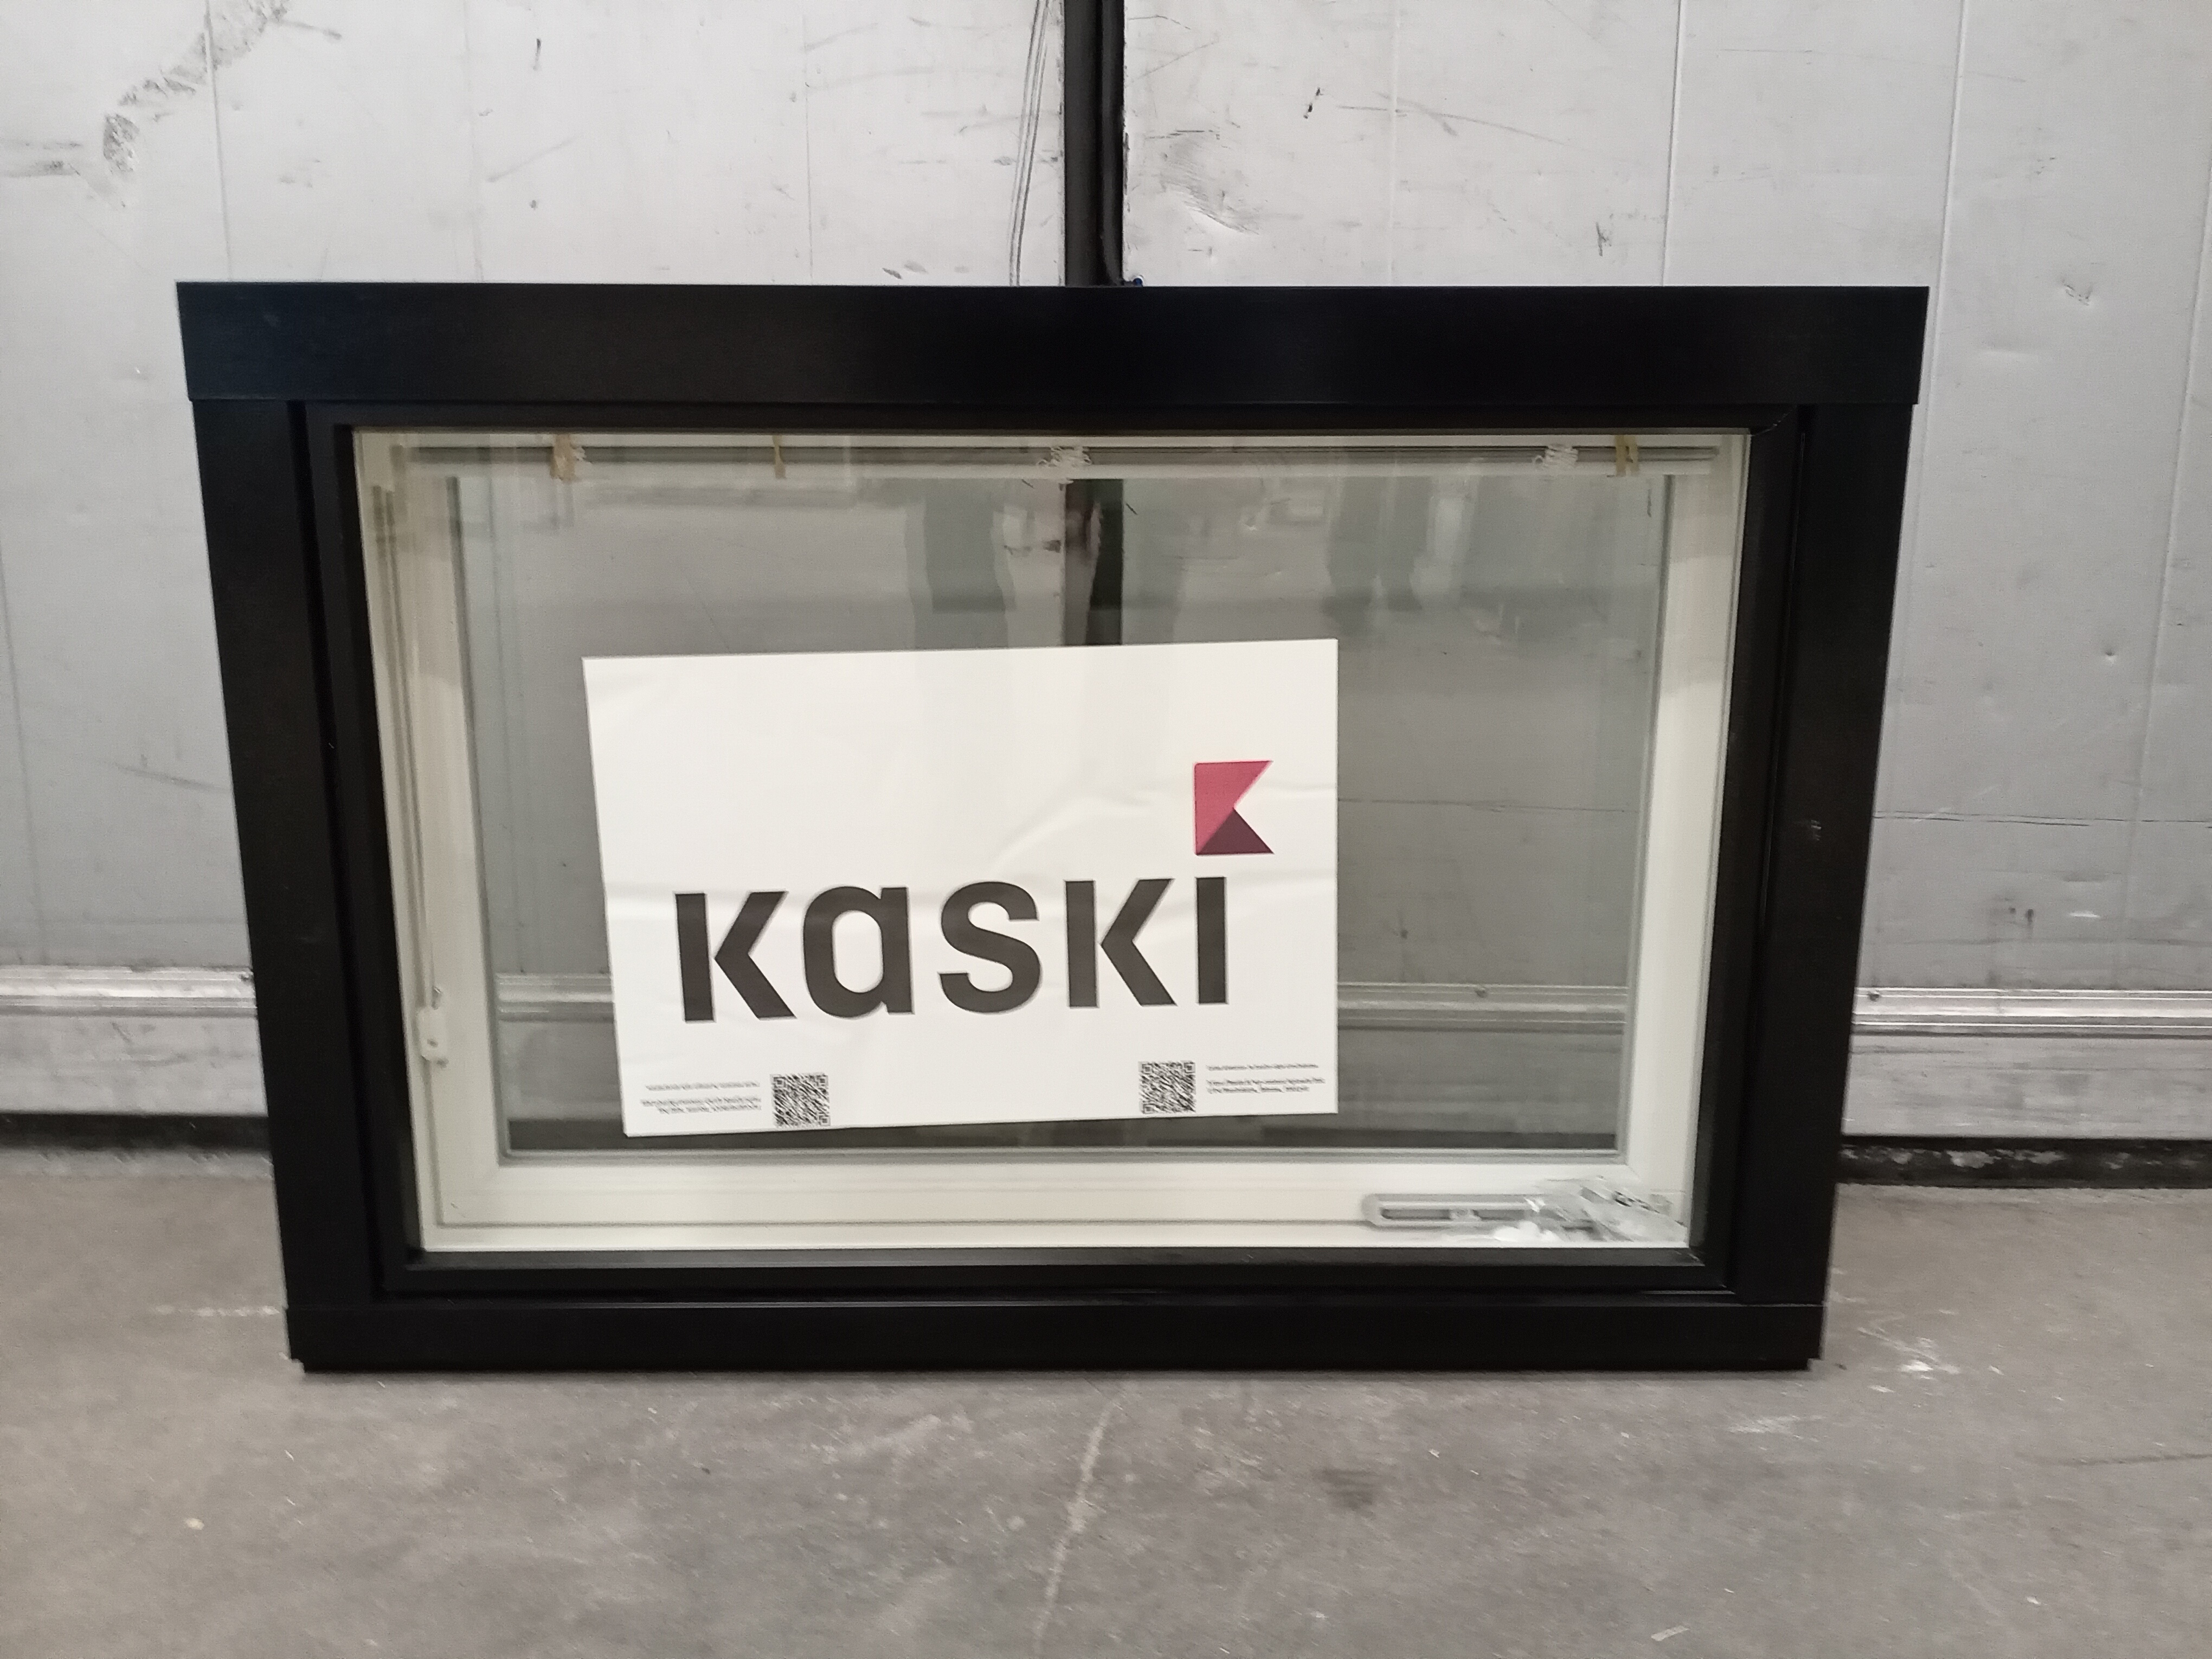 KP2899 Kaskipuu MSEA 170, 970x670, 10x7 Vit/svart. Vädringsfönster